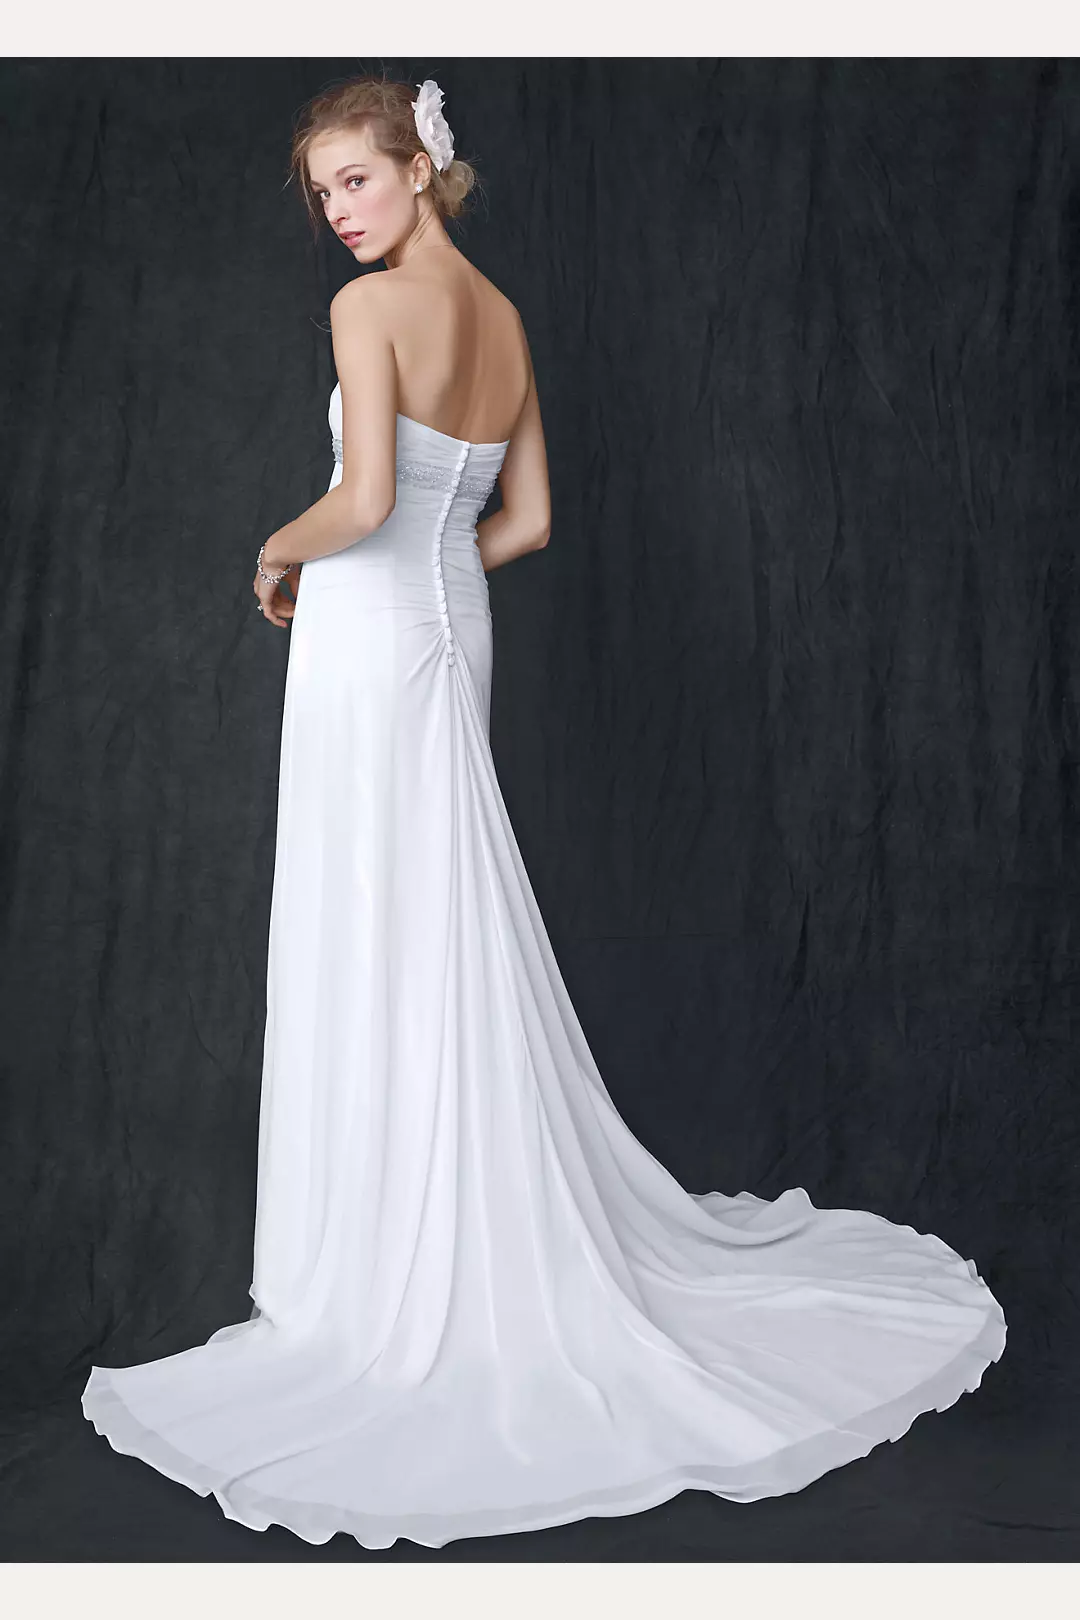 Sweetheart Chiffon Wedding Dress with Side Drape Image 2